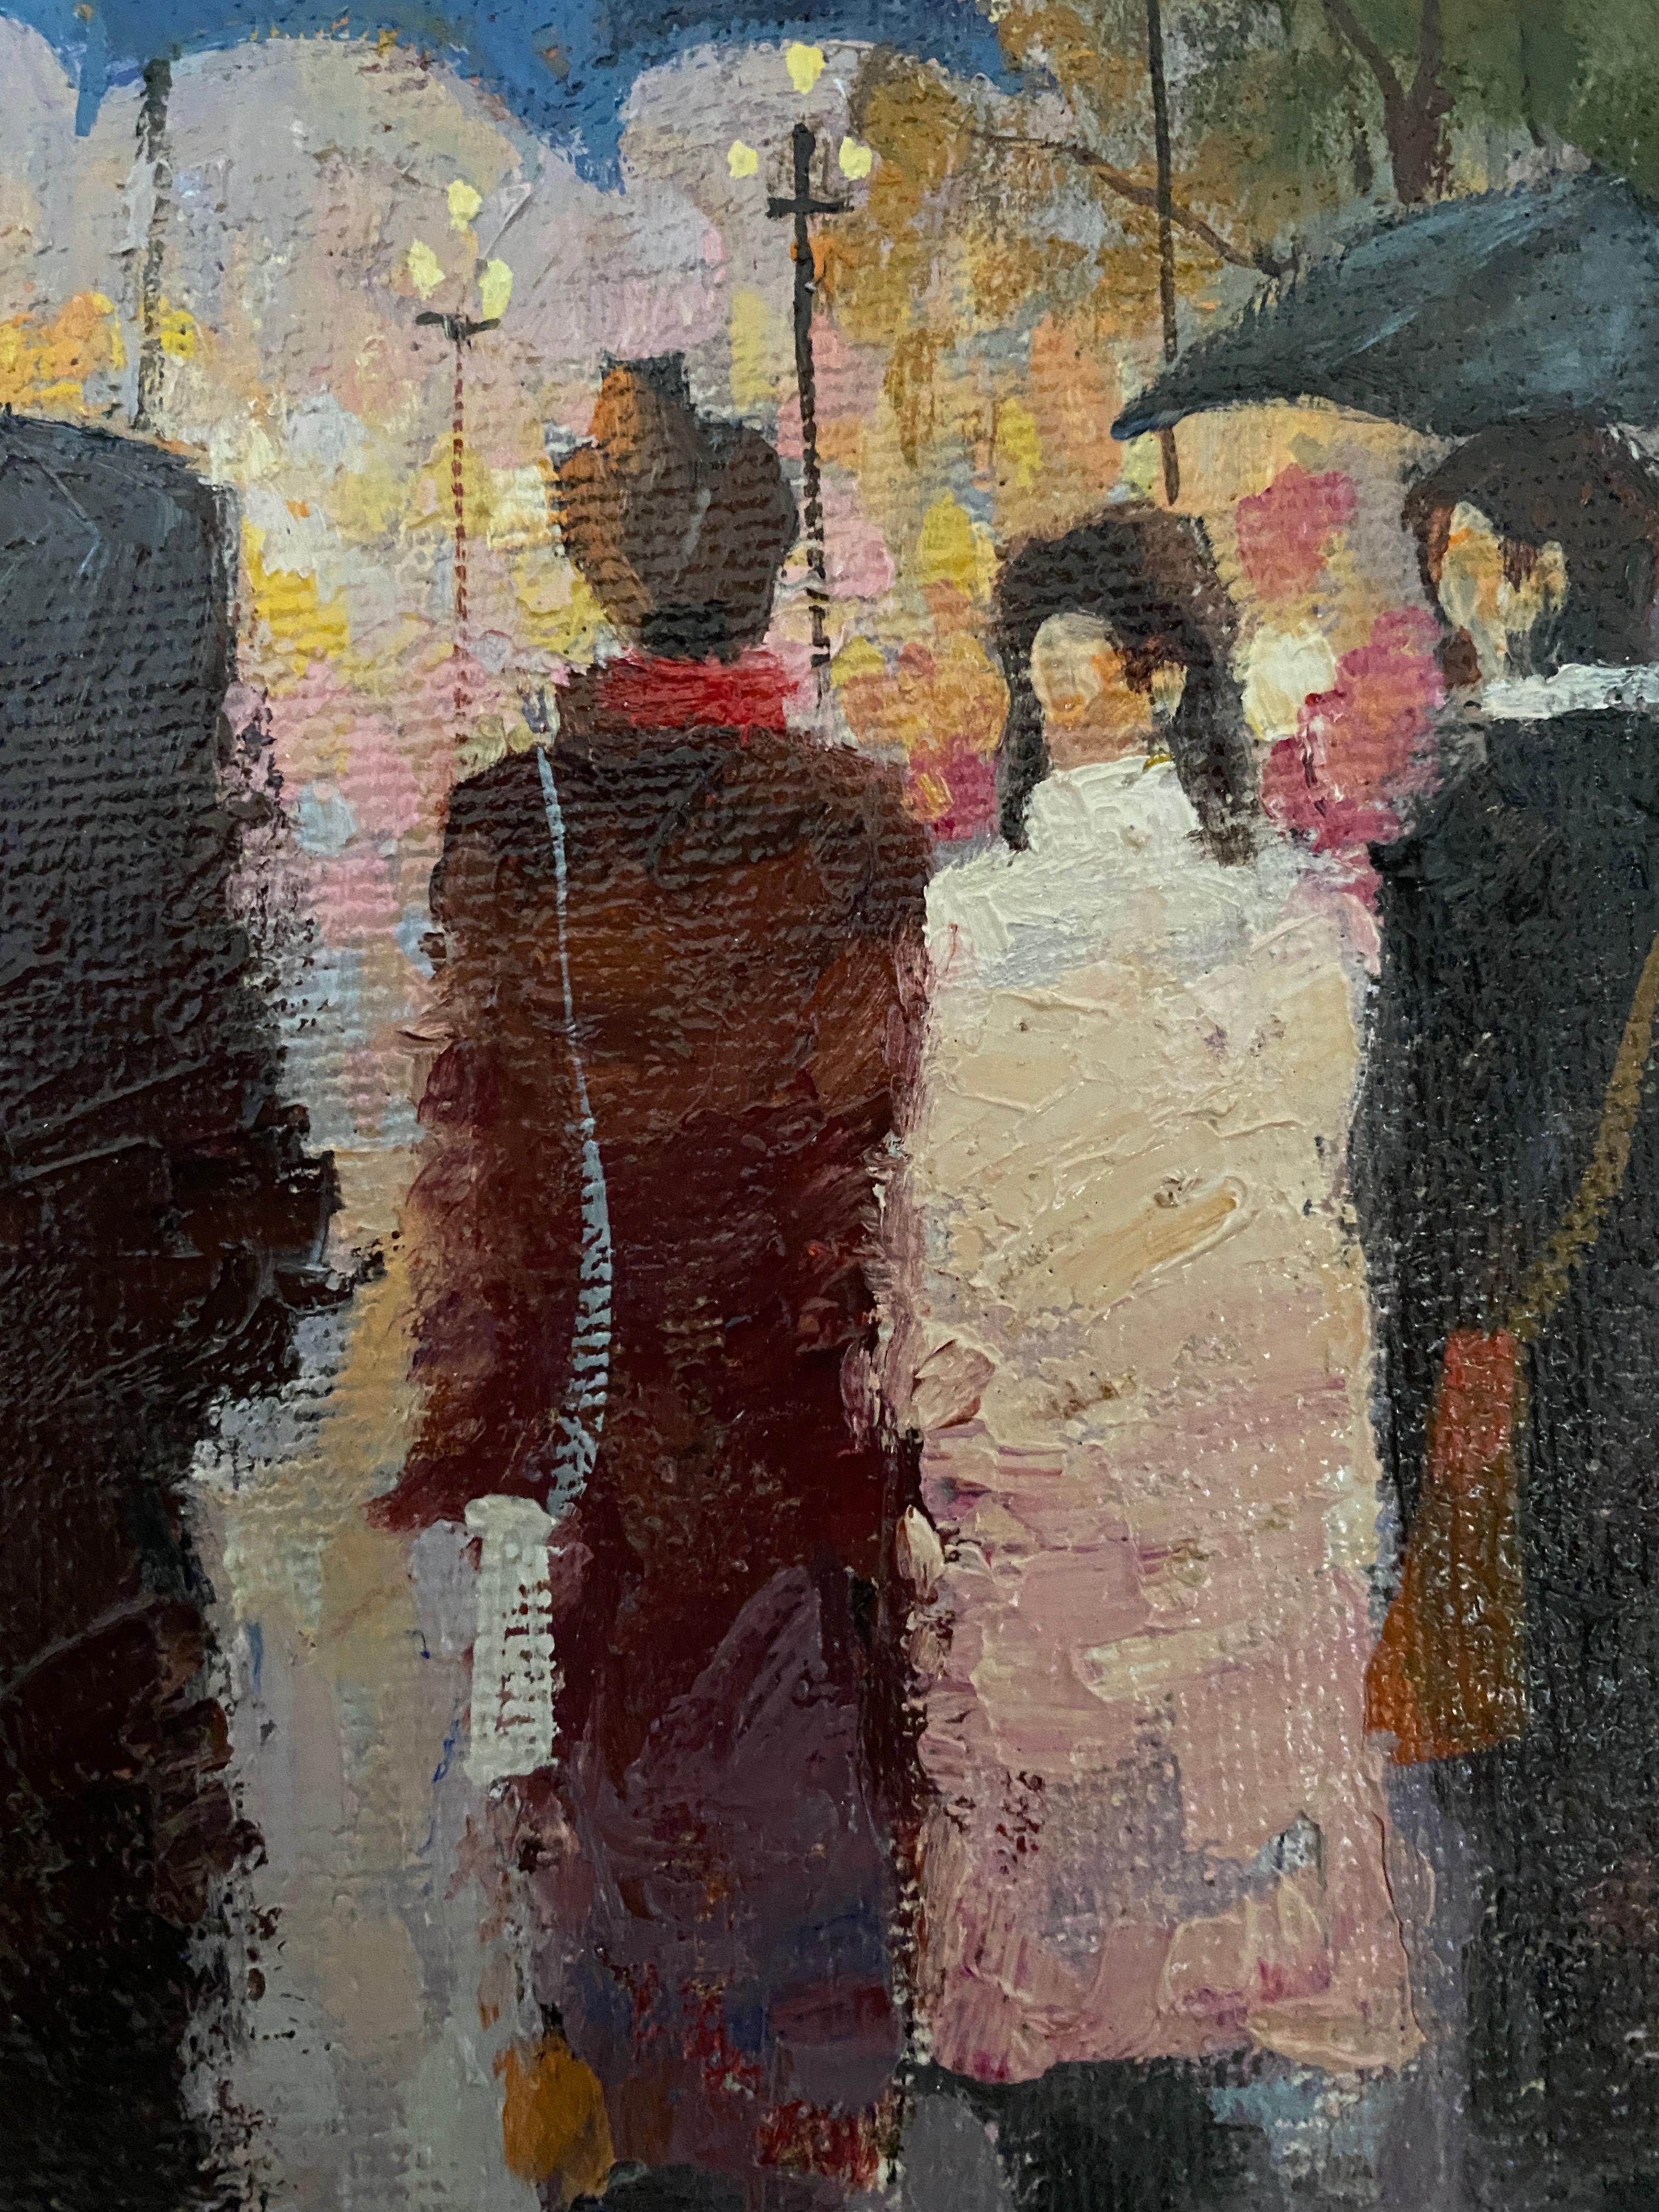 Rainy day. Oil on canvas. Impressionistic colorful street scene. 3